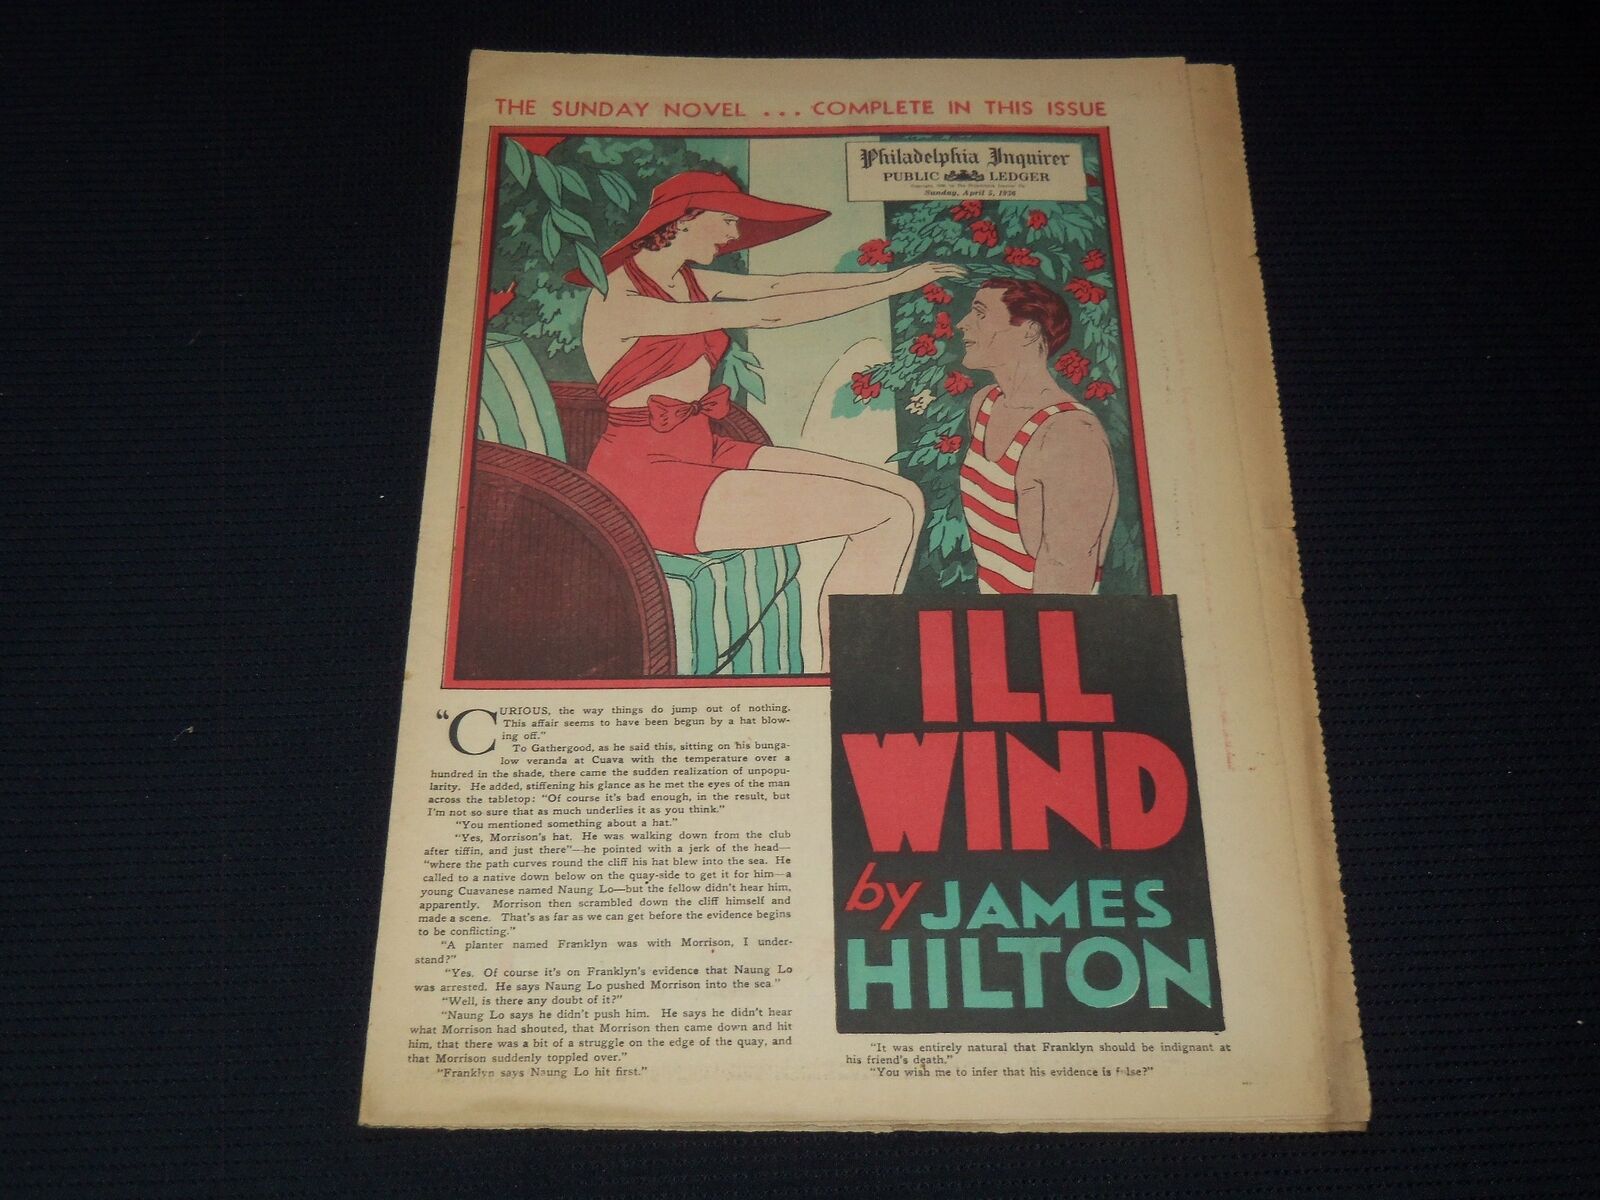 1936 APR 5 PHILADELPHIA INQUIRER SUNDAY NOVEL SECTION - JAMES HILTON - NP 3296J